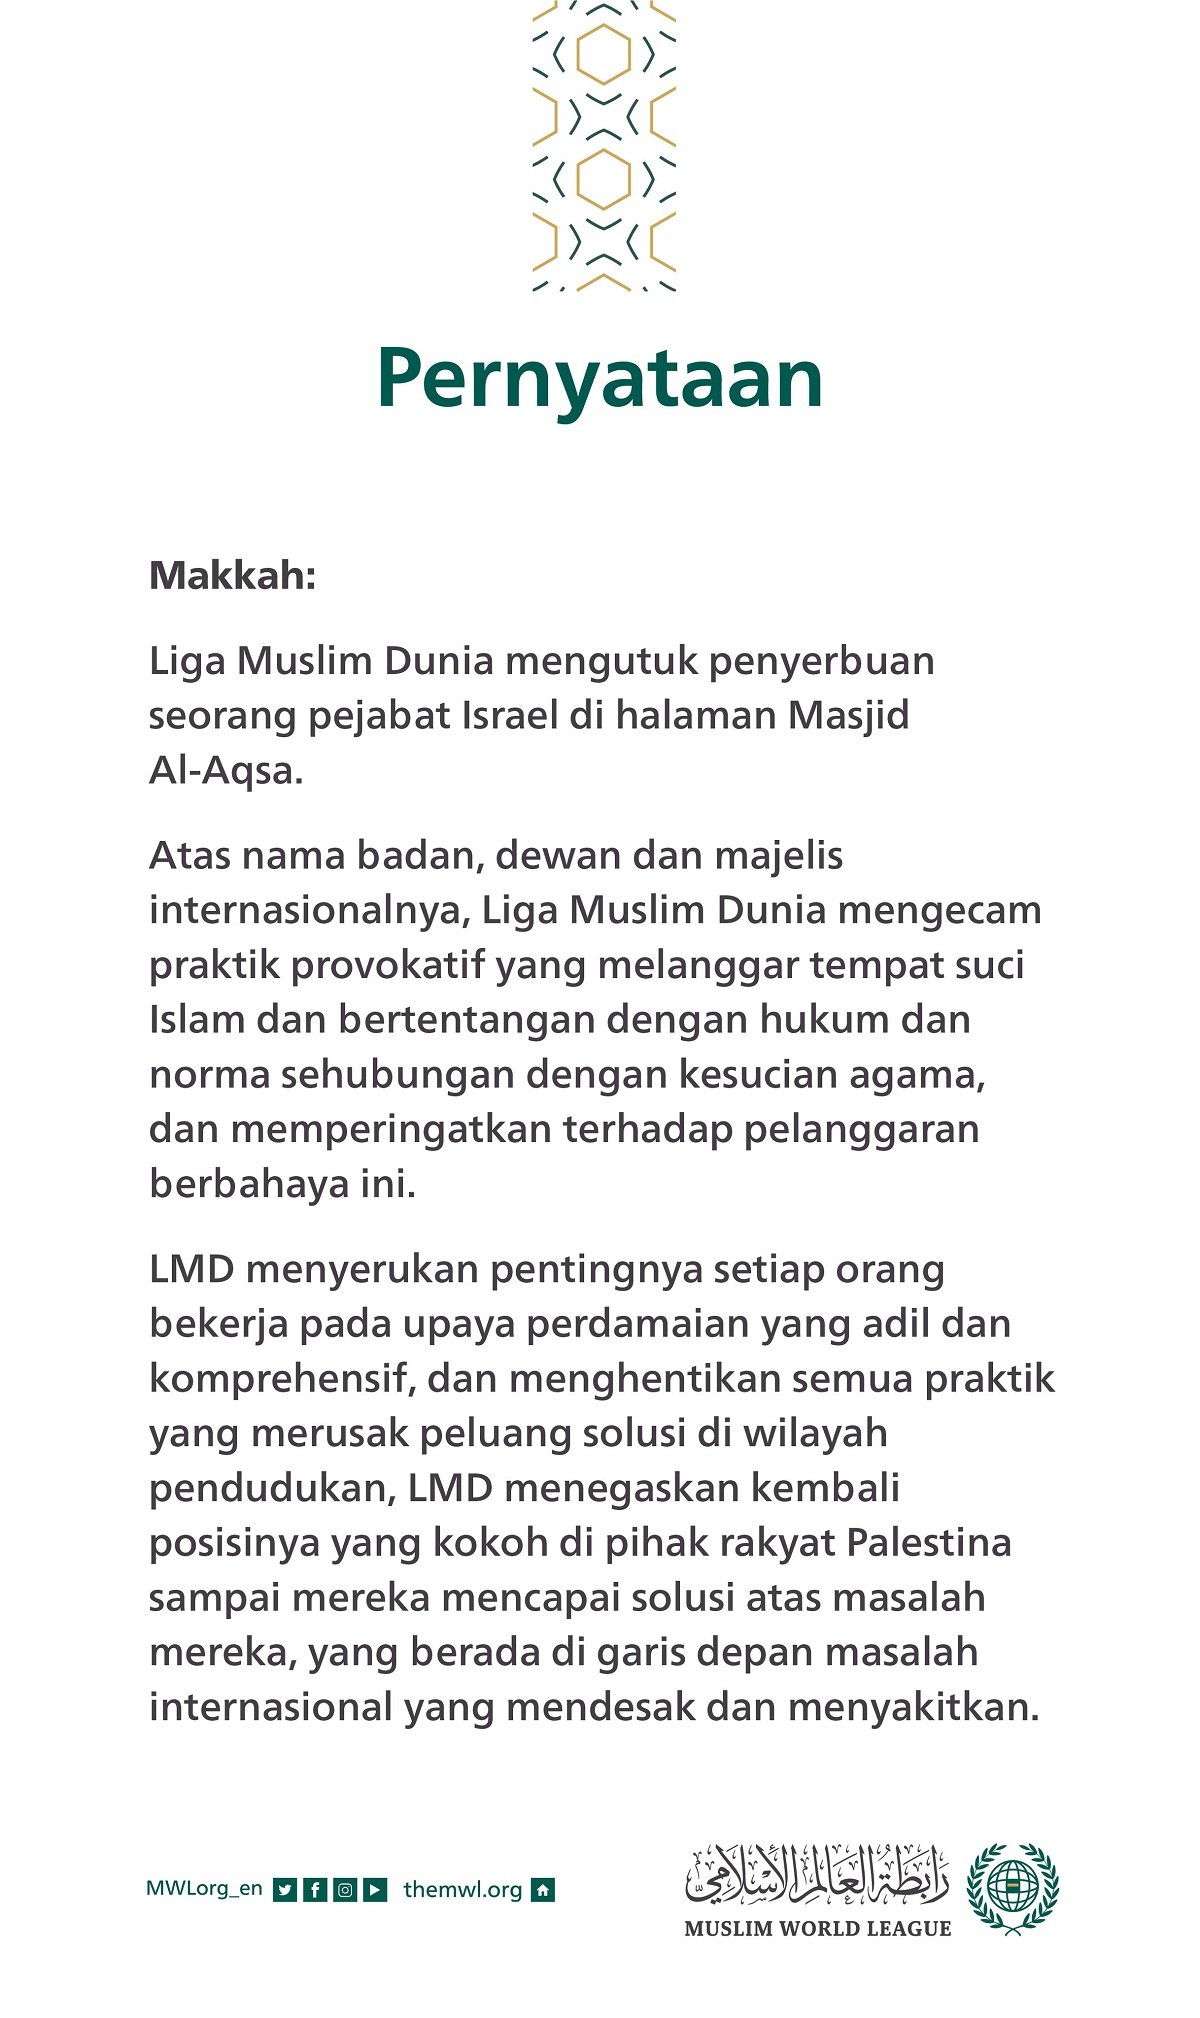 Pernyataan dari Liga Muslim Dunia